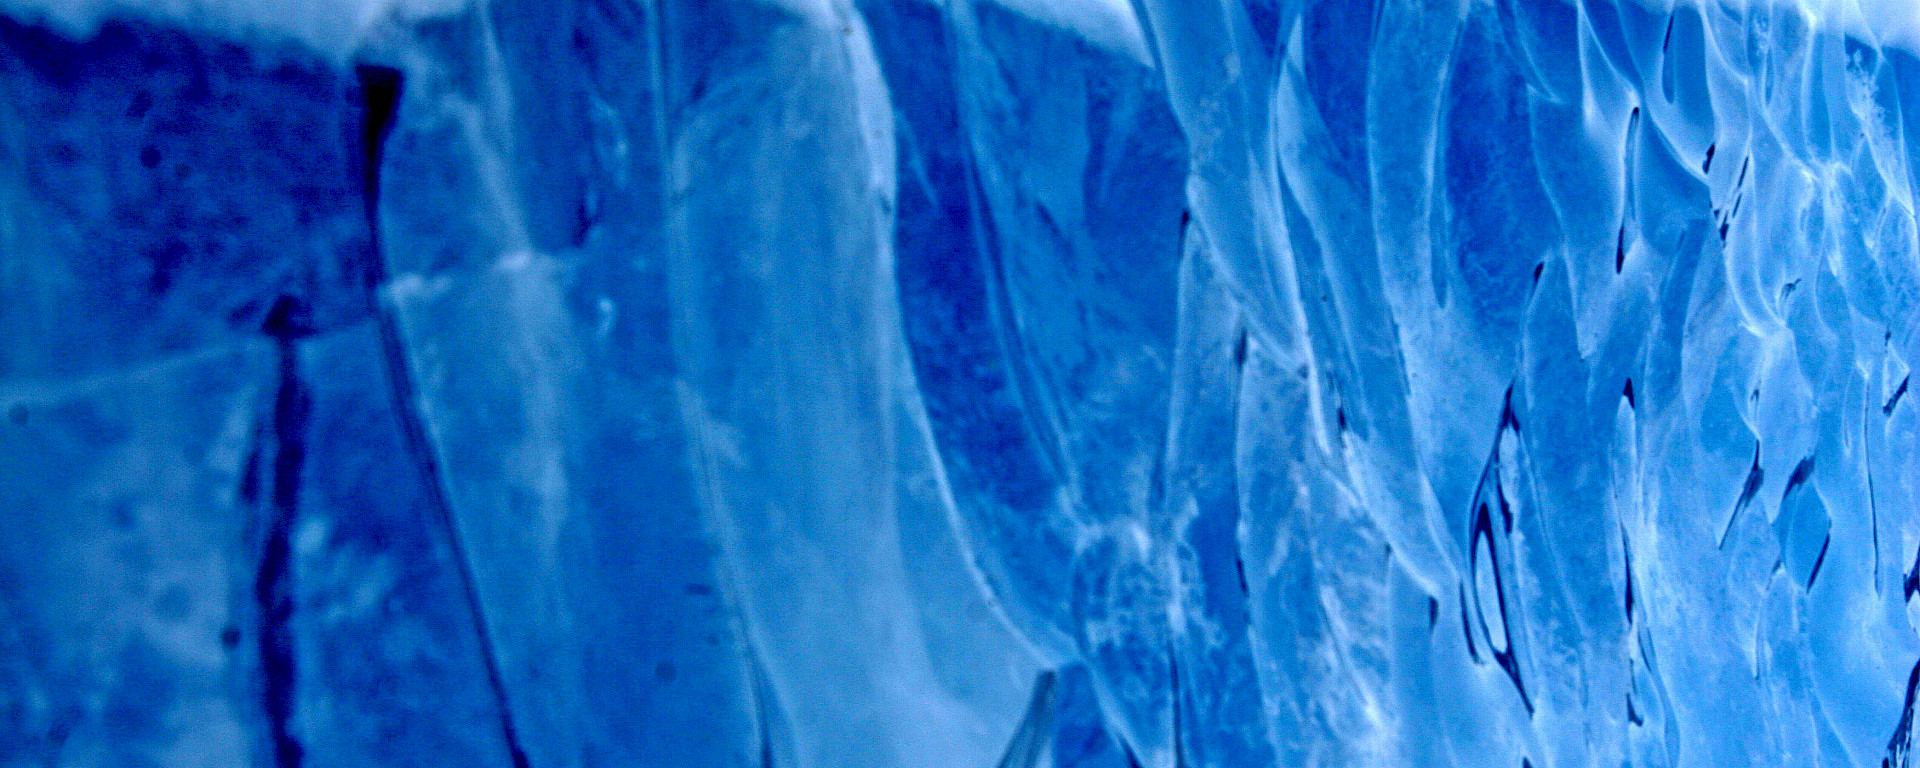 Wind-scoured blue ice